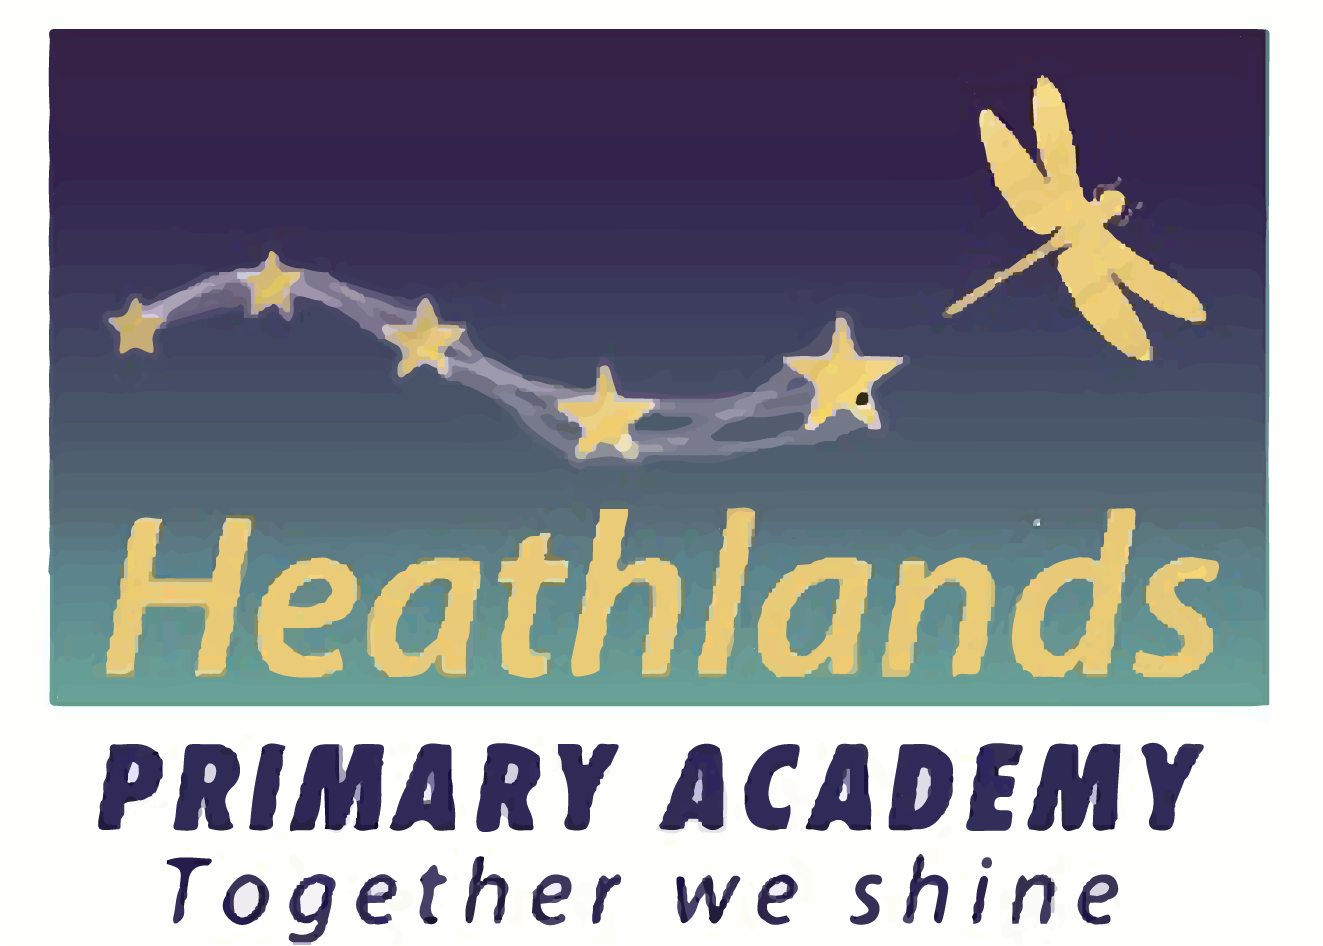 Heathlands Primary Academy